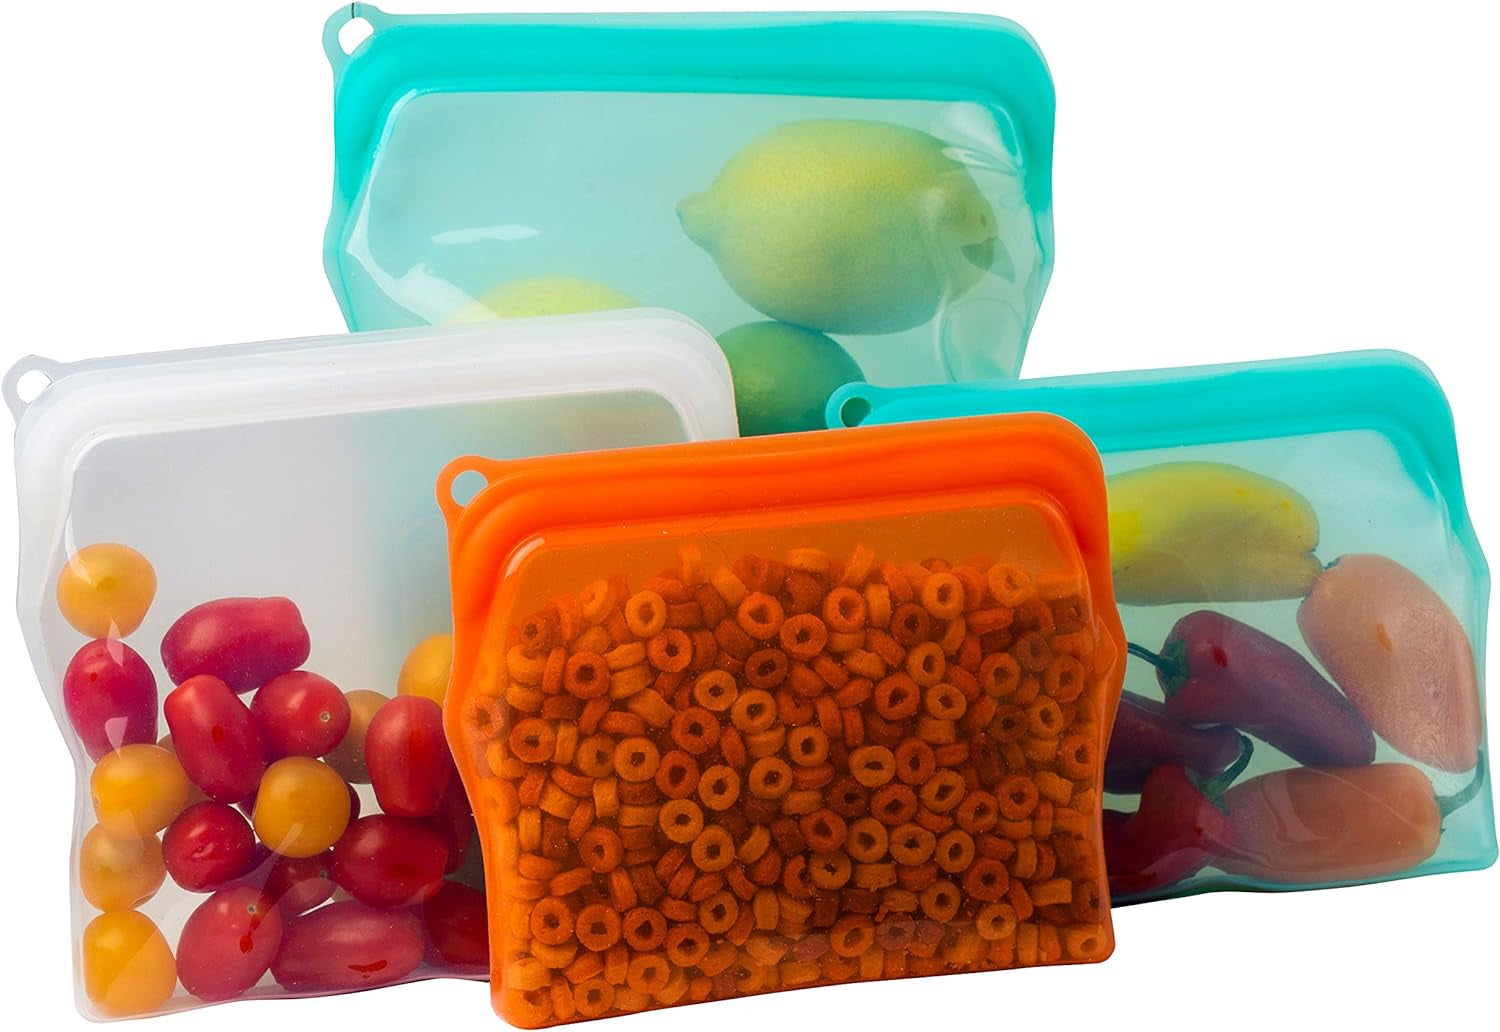 Two-30 Oz 100% Silicone Bags Reusable Storage - Freezer Bags - Eco-Friendly, Food-Grade, Leak-Proof Zipper Bags - 2 Pack Reusable Silicone Bags for Food Storage (4 Cups/ 30 Oz.)